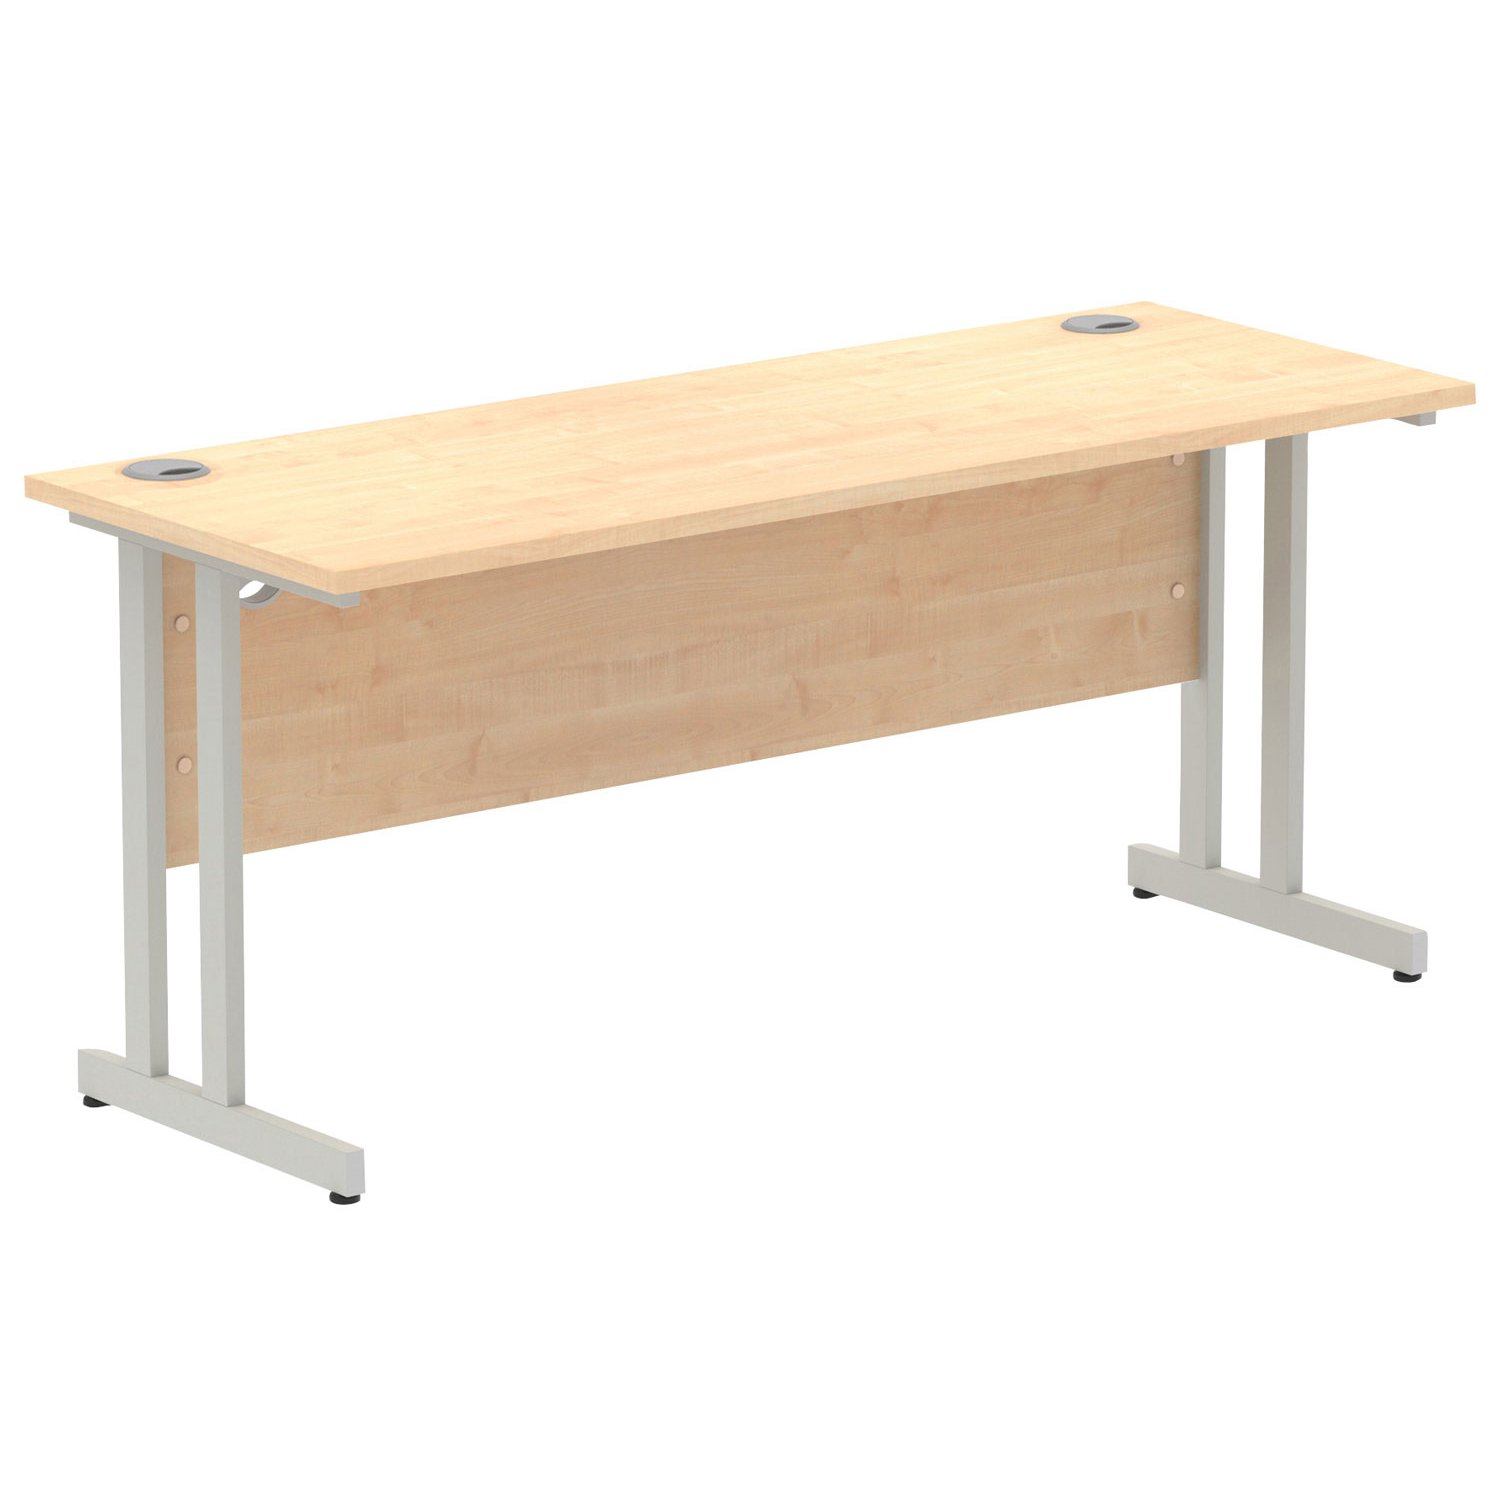 Vitali C-Leg Narrow Rectangular Desk (Silver Legs), 160wx60dx73h (cm), Maple